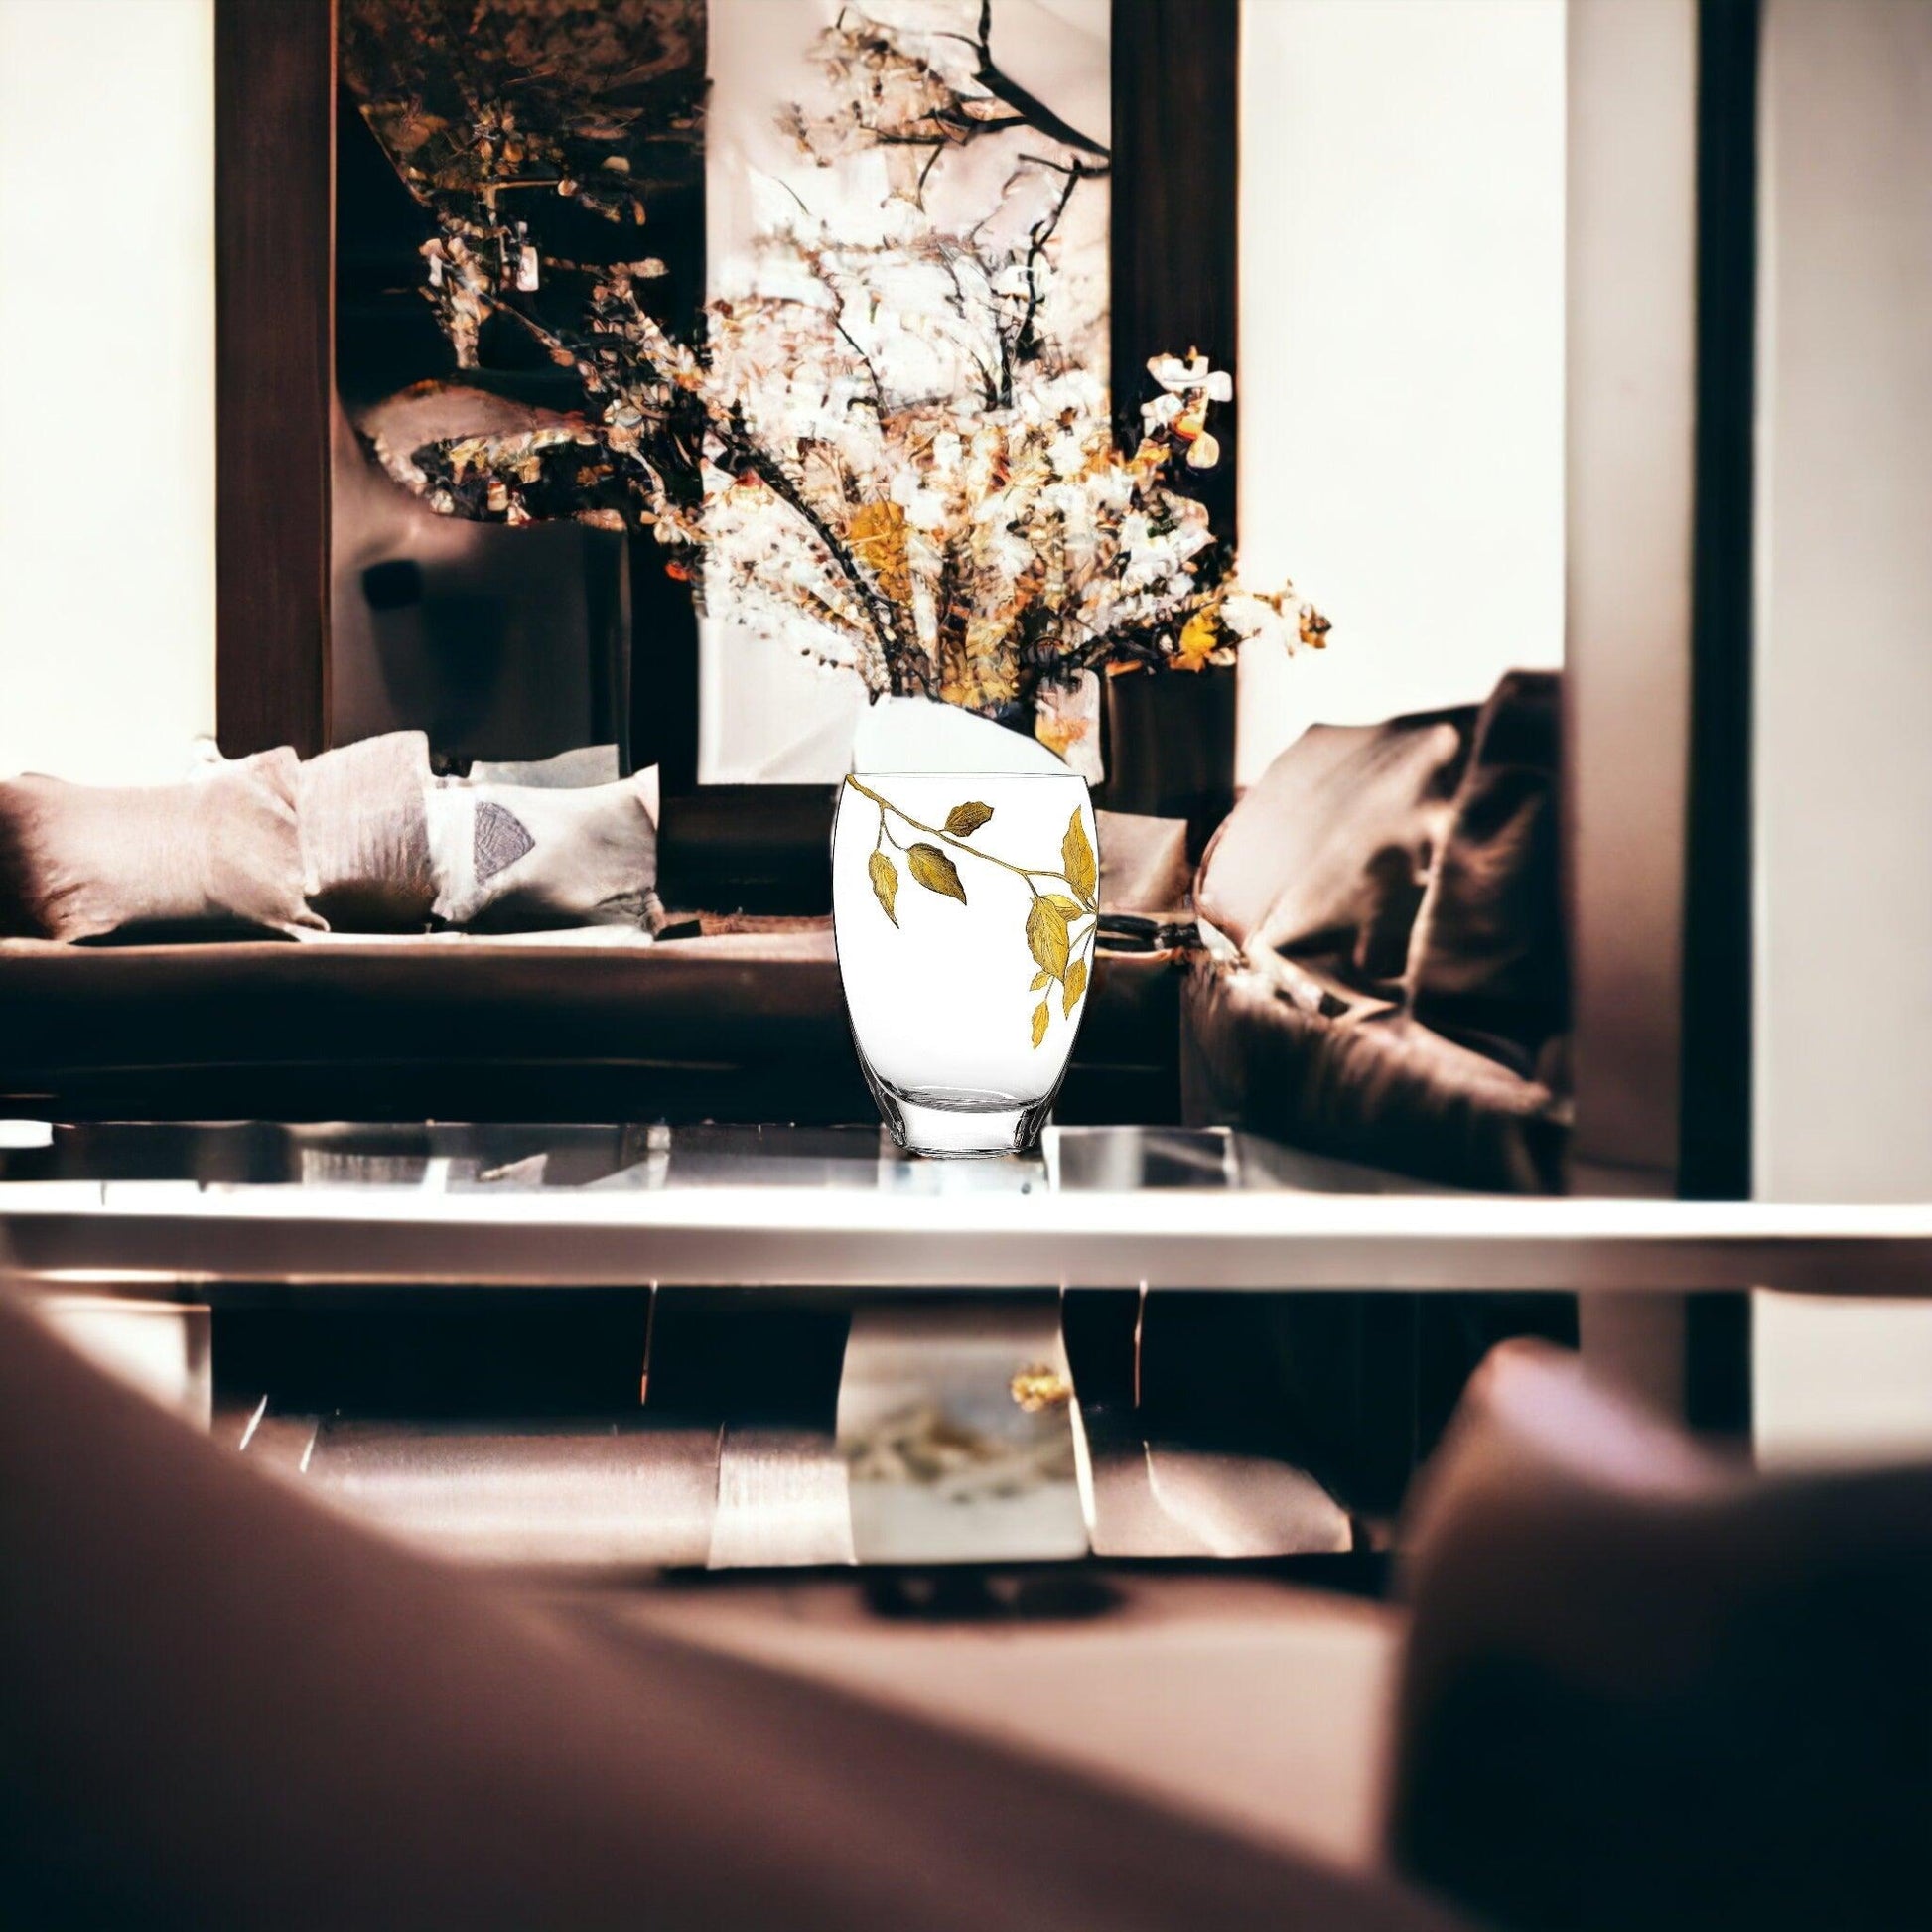 Decorative Vase | 12 inch Crystal Vase with Etched Gold Leaves Design - Nature Home Decor